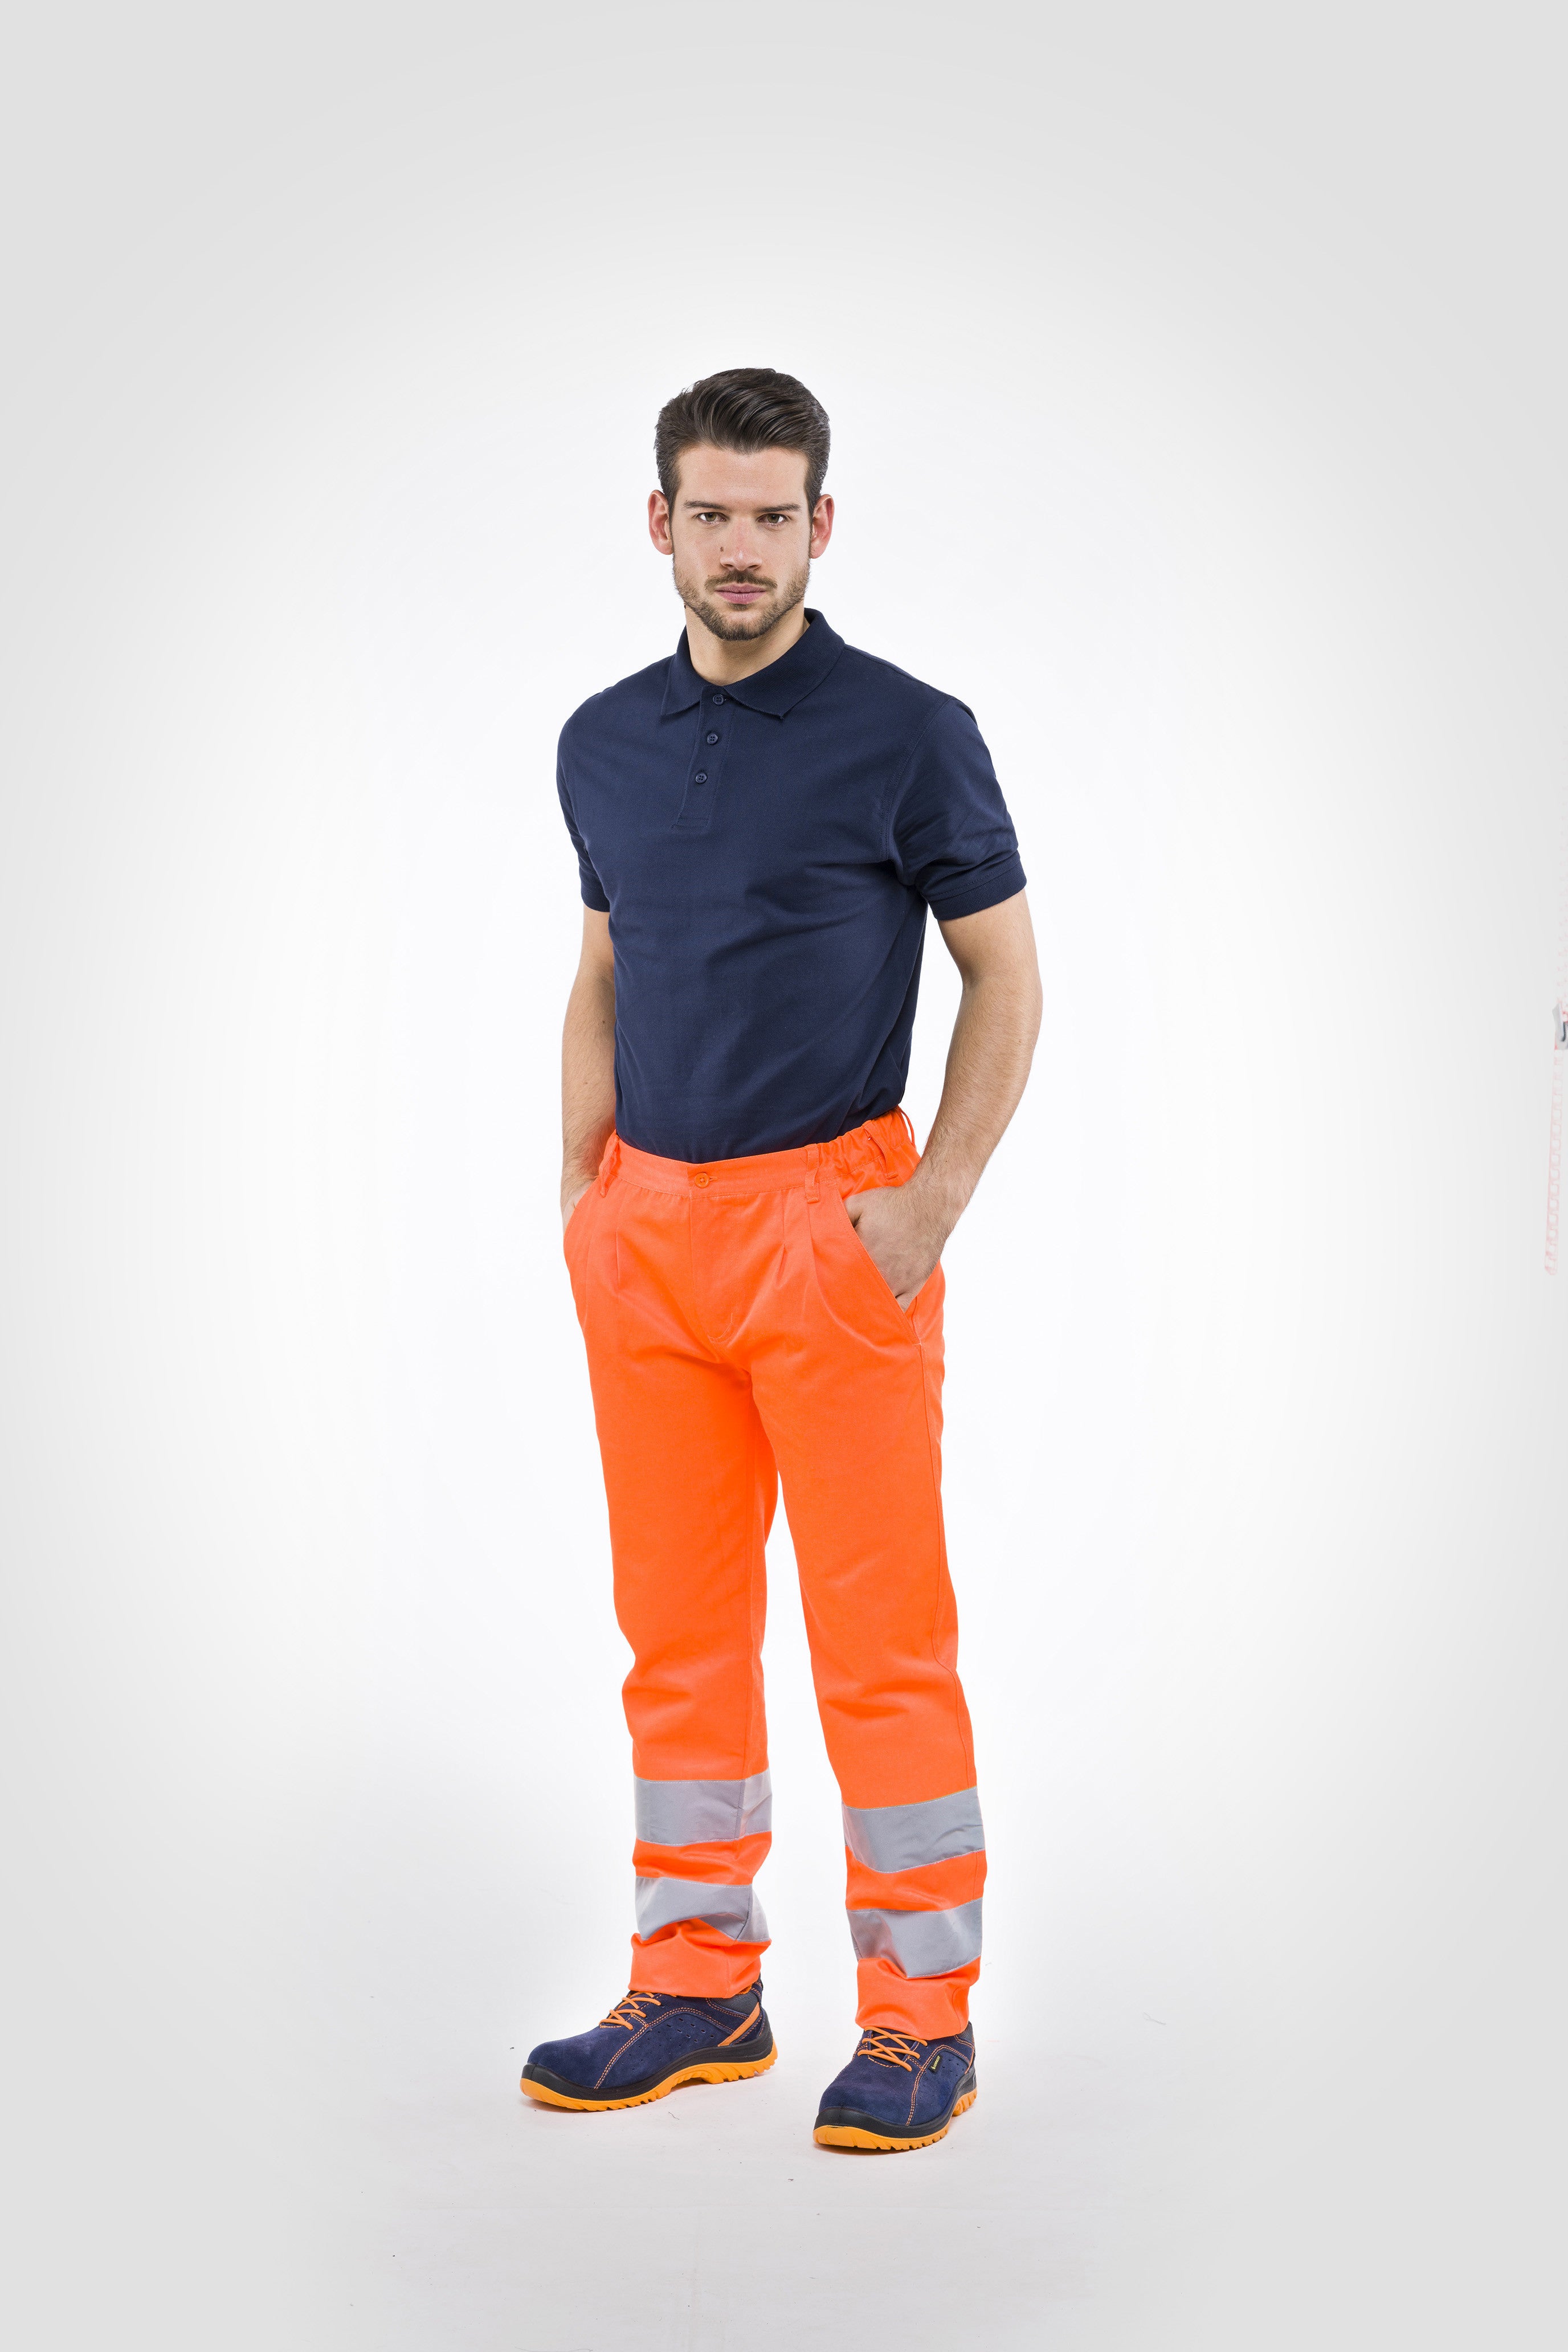 Pantalone alta visibilit arancio tg. xl